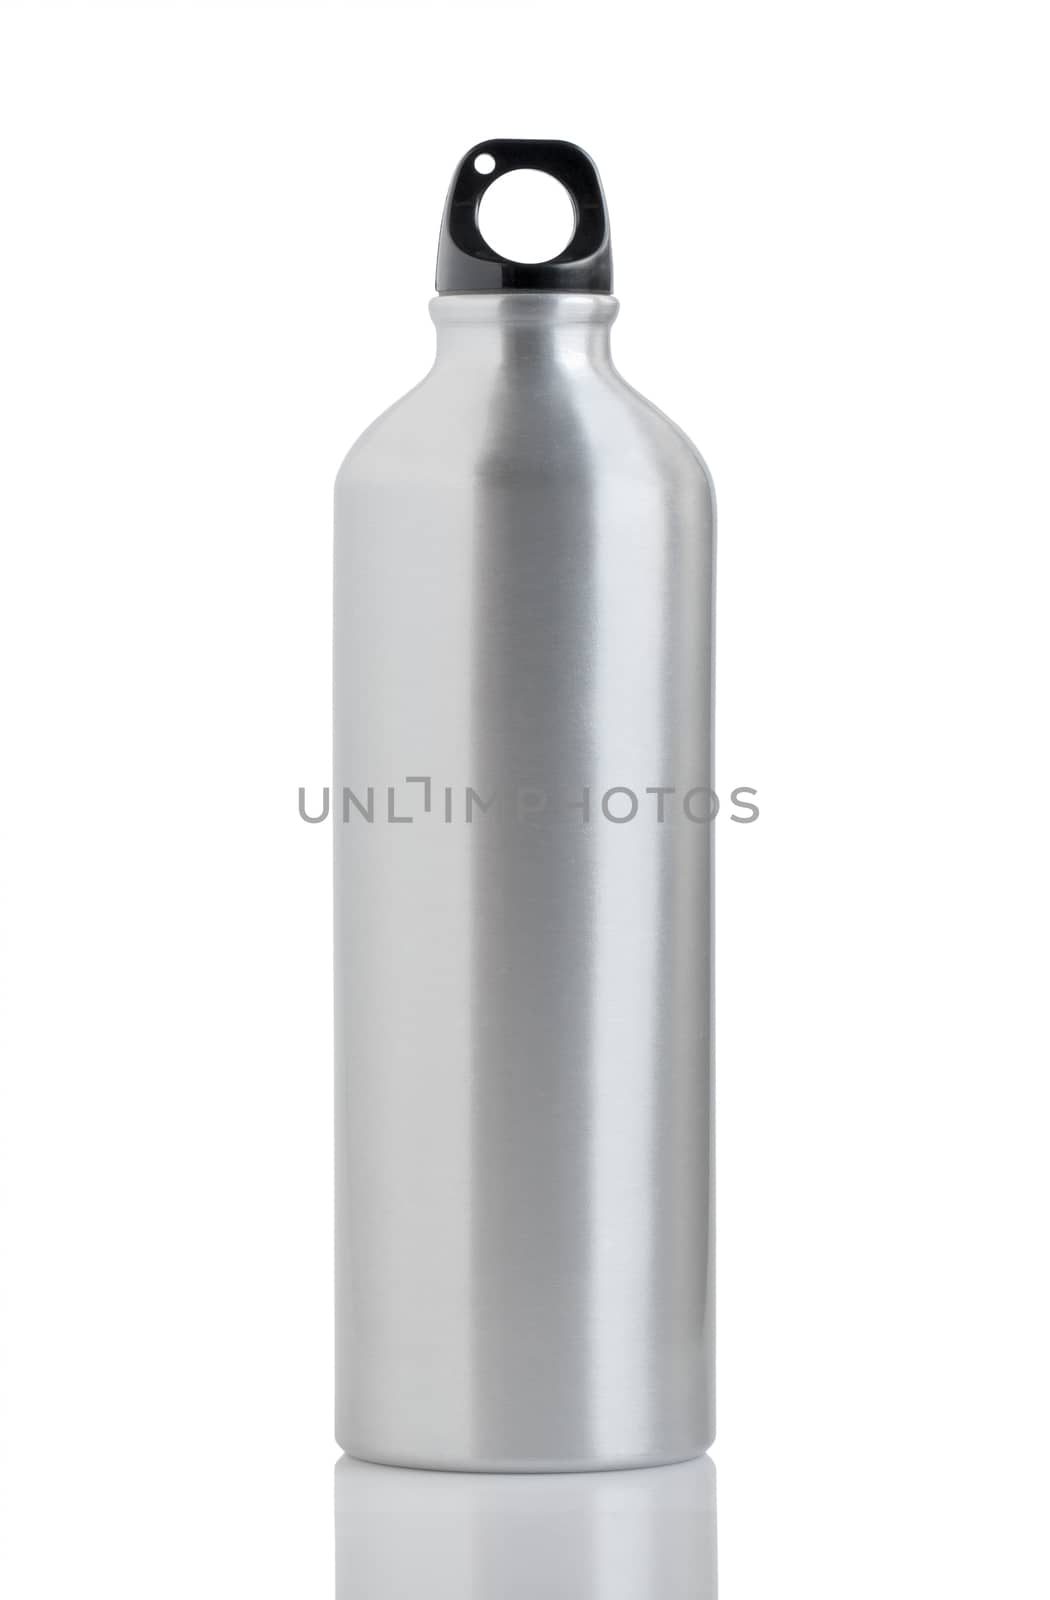 Aluminum bottle by AEyZRiO